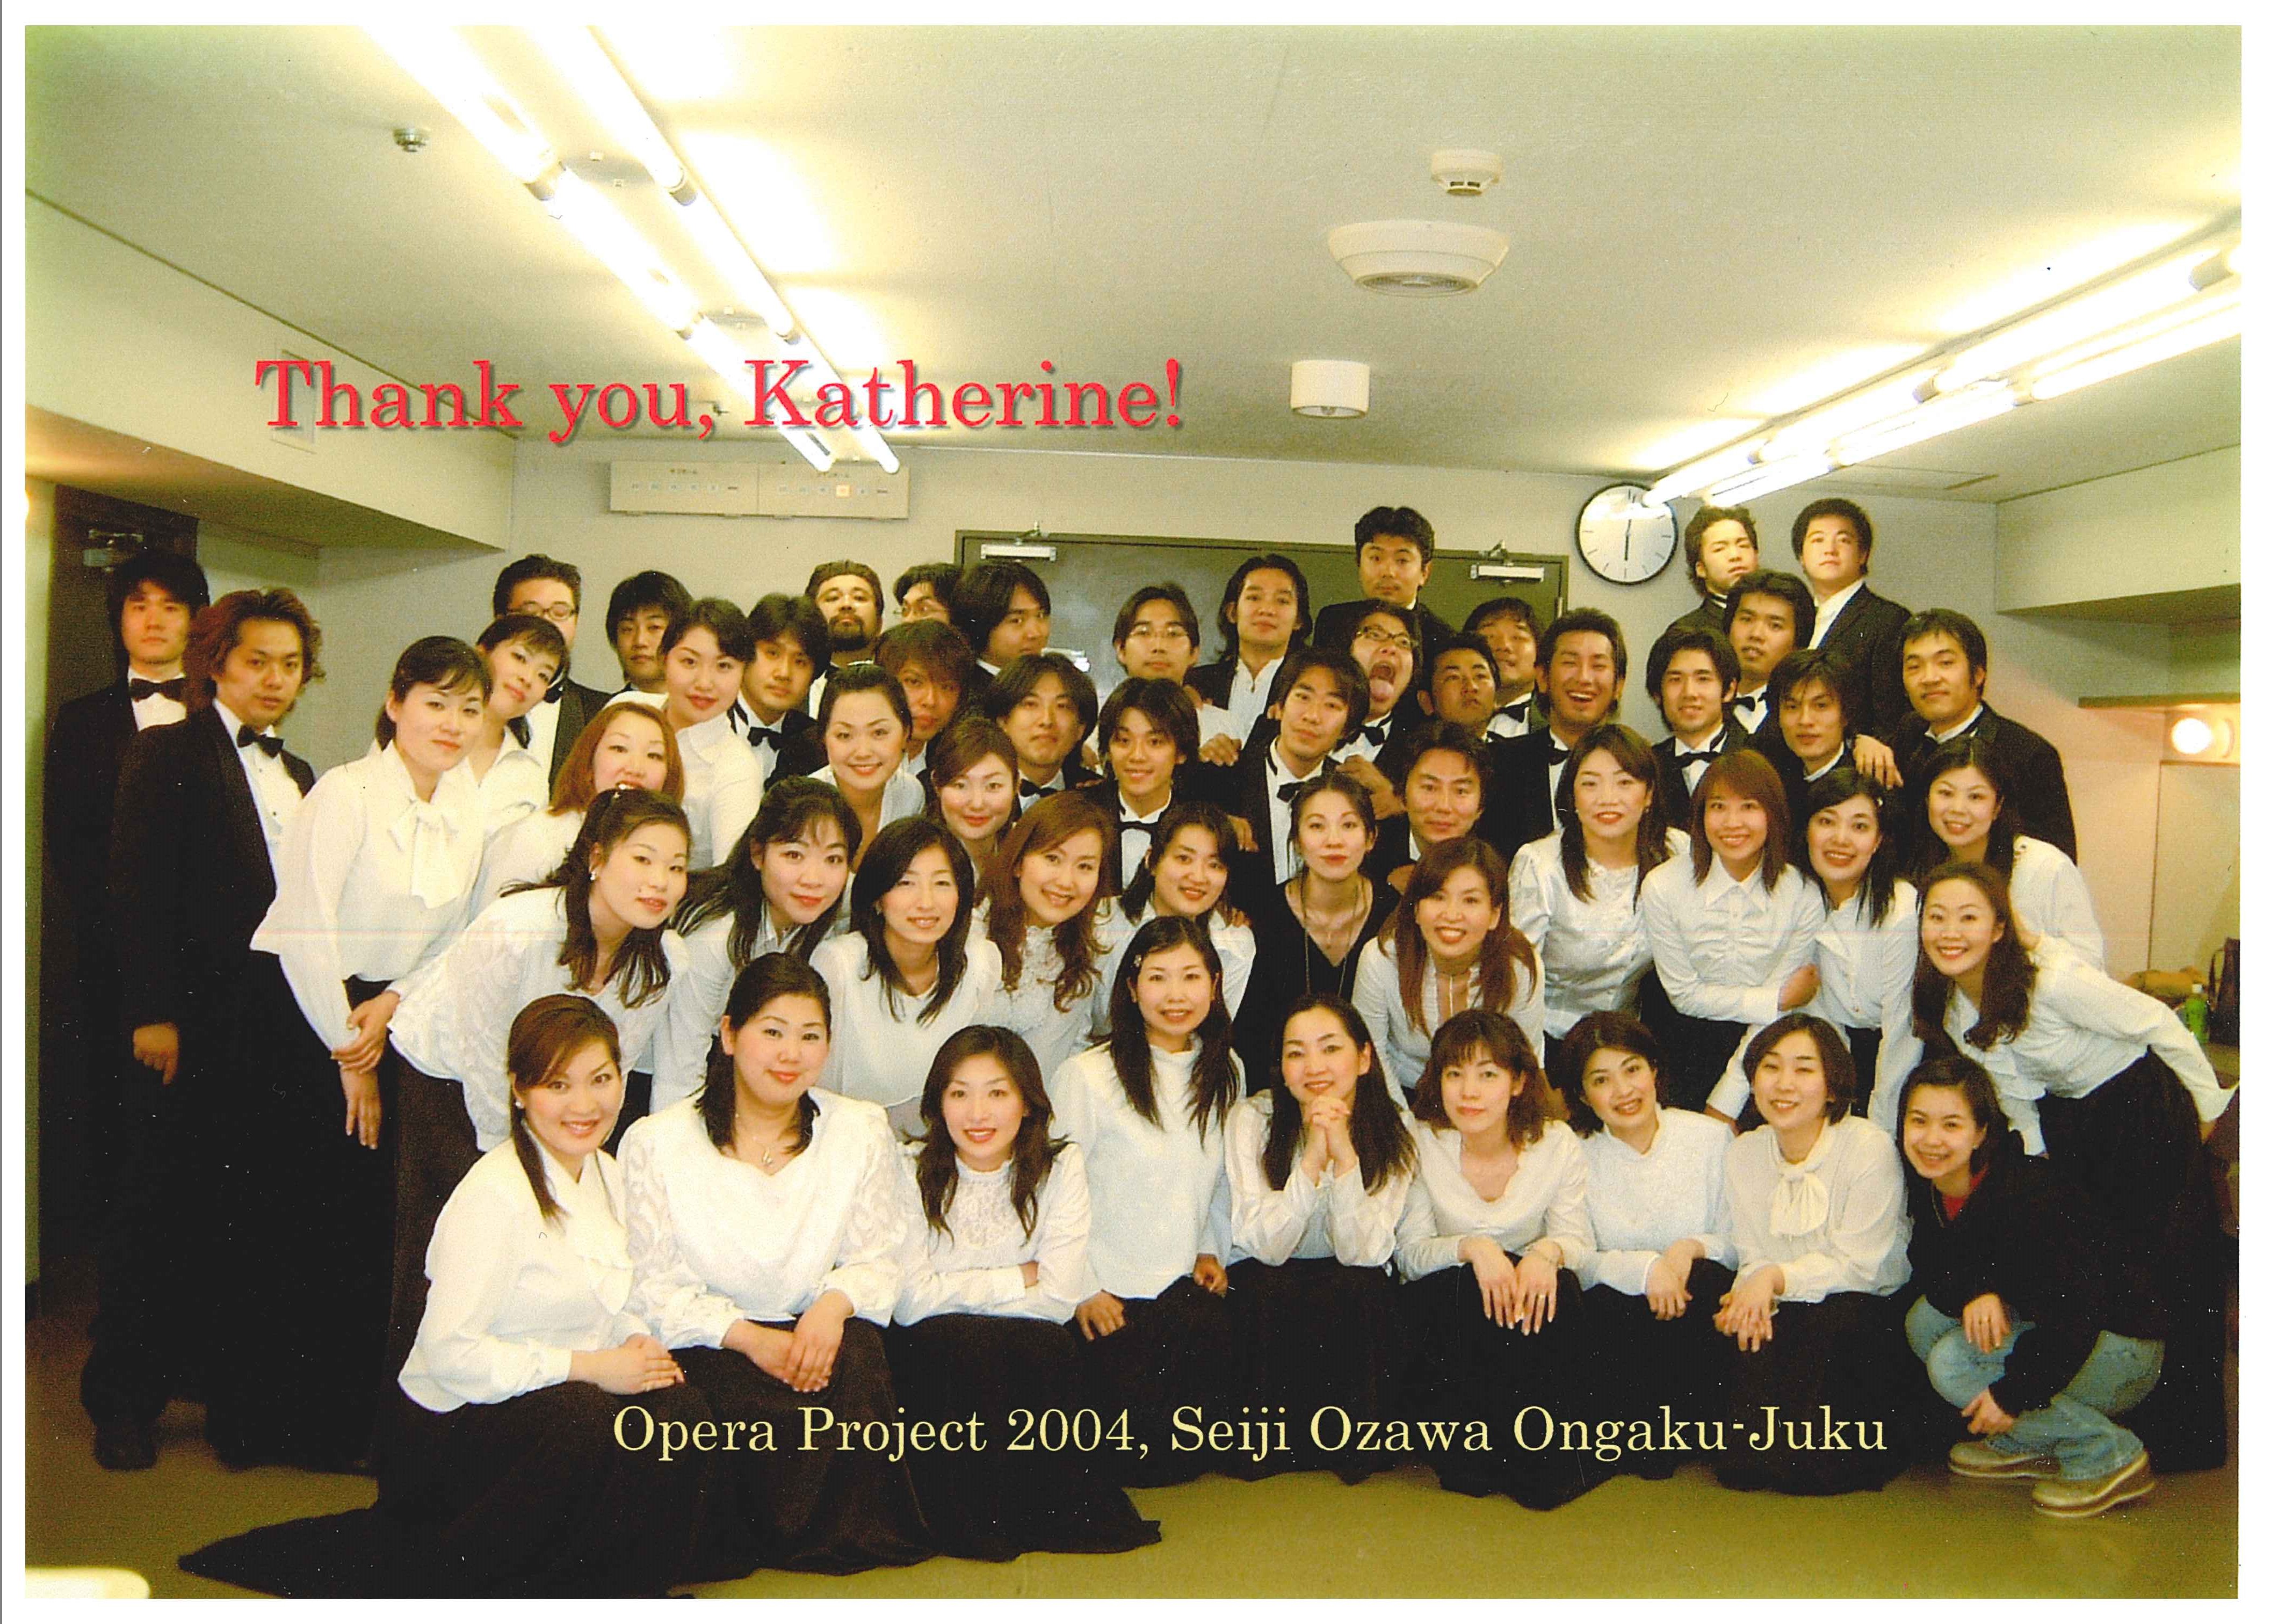 Postcard from the Seiji Ozawa Academy (Seiji Ozawa Ongaku-Juku) back in 2004. 